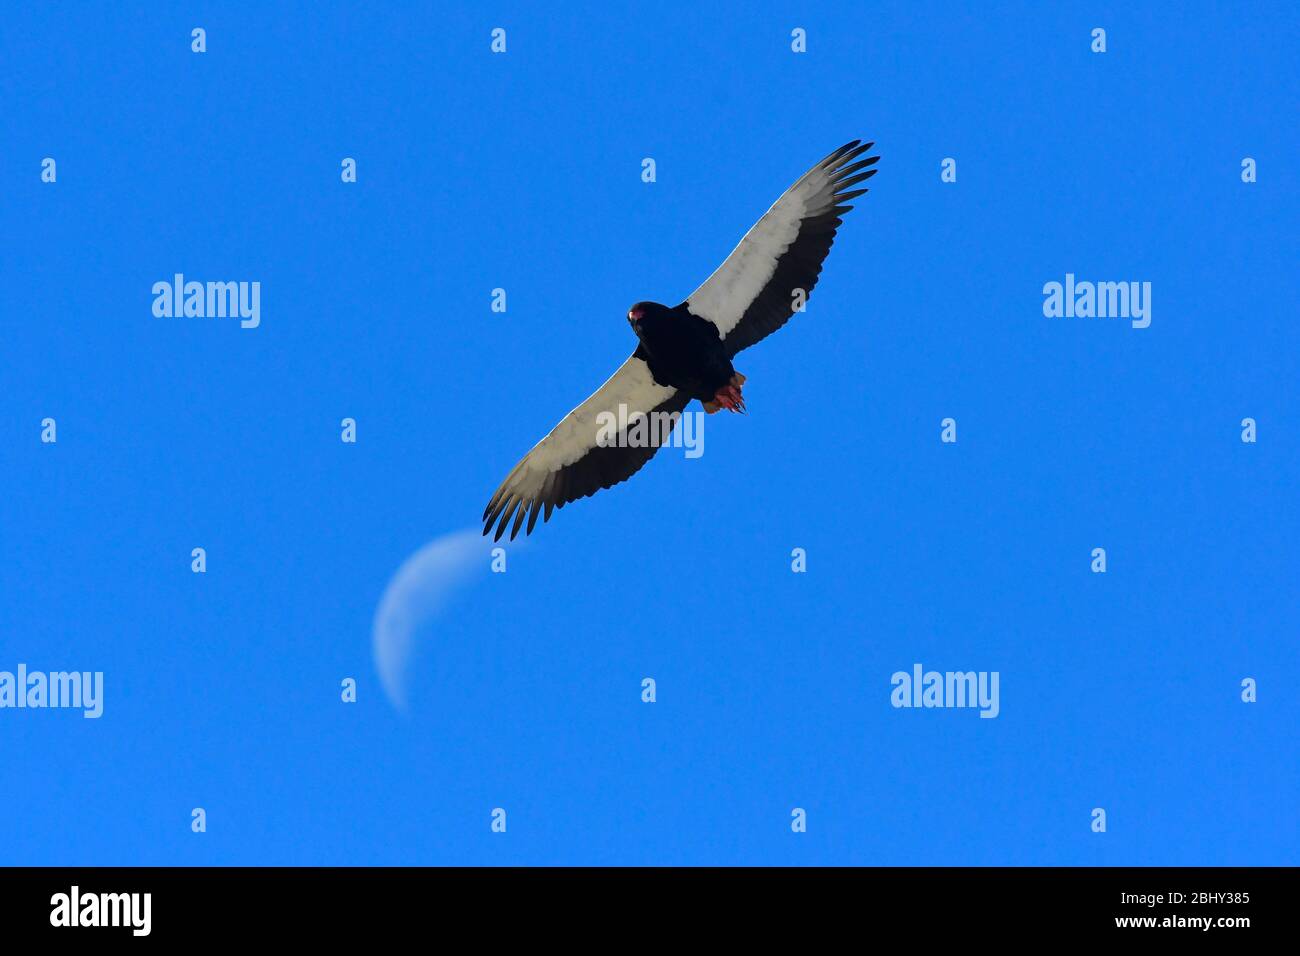 Bird watching in Africa. Bataleur eagle in flight, sickle moon in background. Stock Photo